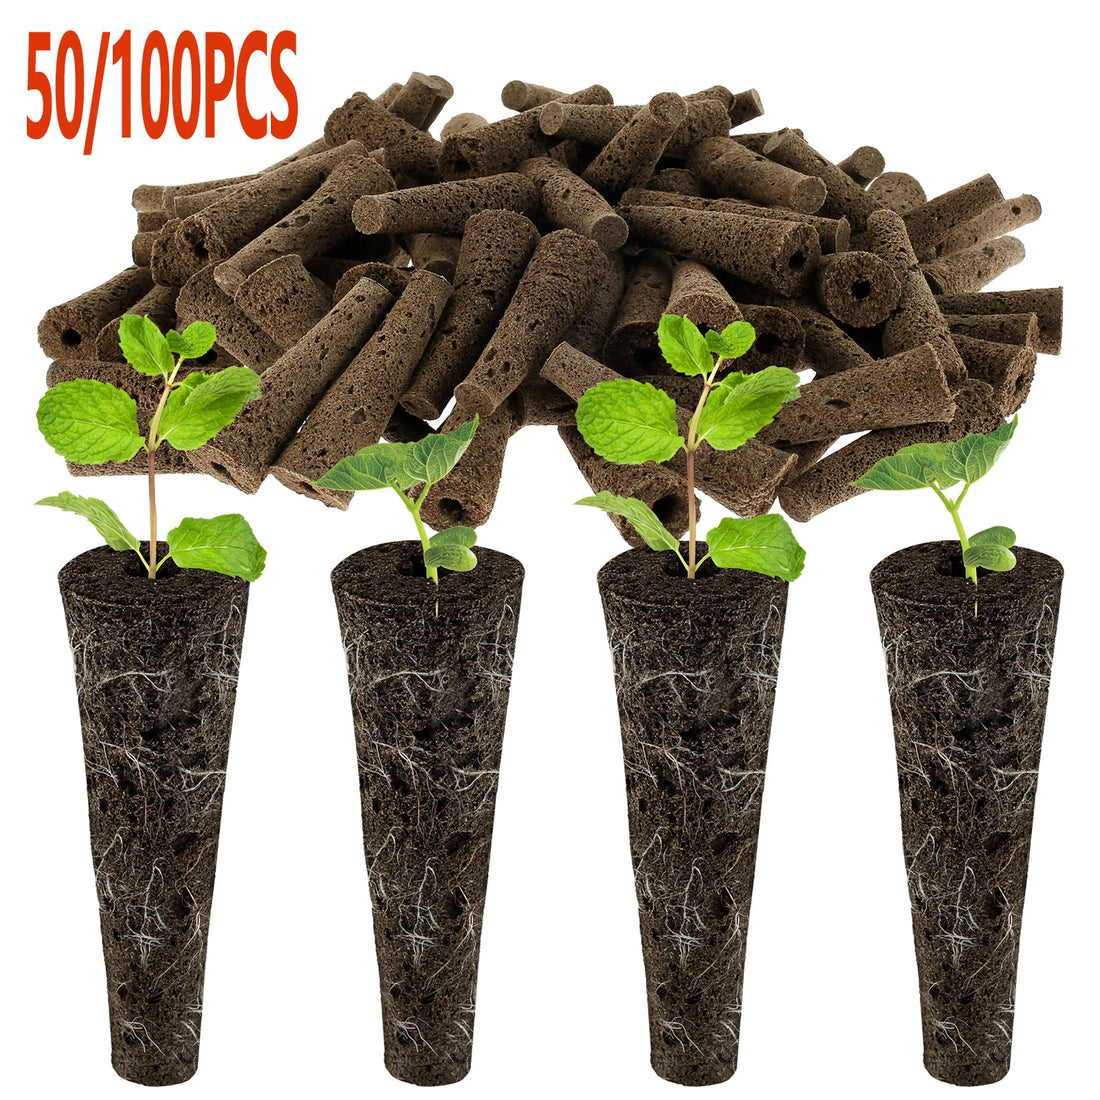  50/100Pcs Hydroponic Sponge Garden Vegetable Soilless Cultivation Growing Media Sponge Hydroponic Baskets Cloning Collar Garden